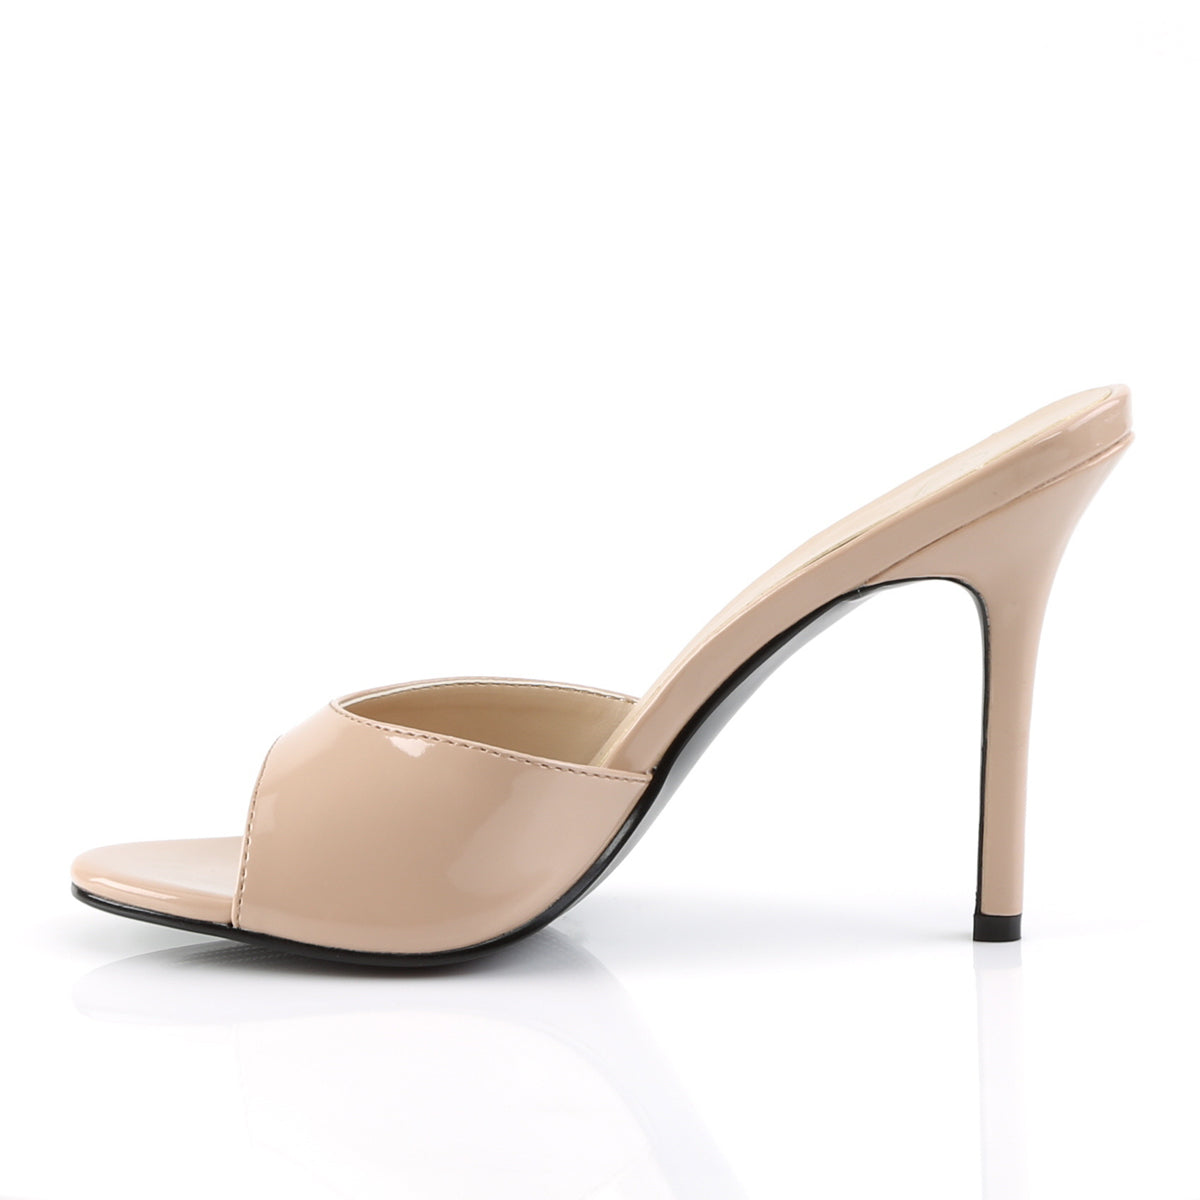 CLASSIQUE-01 Pleaser 4 Inch Heel Nude Patent Fetish Footwear-Pleaser- Sexy Shoes Pole Dance Heels